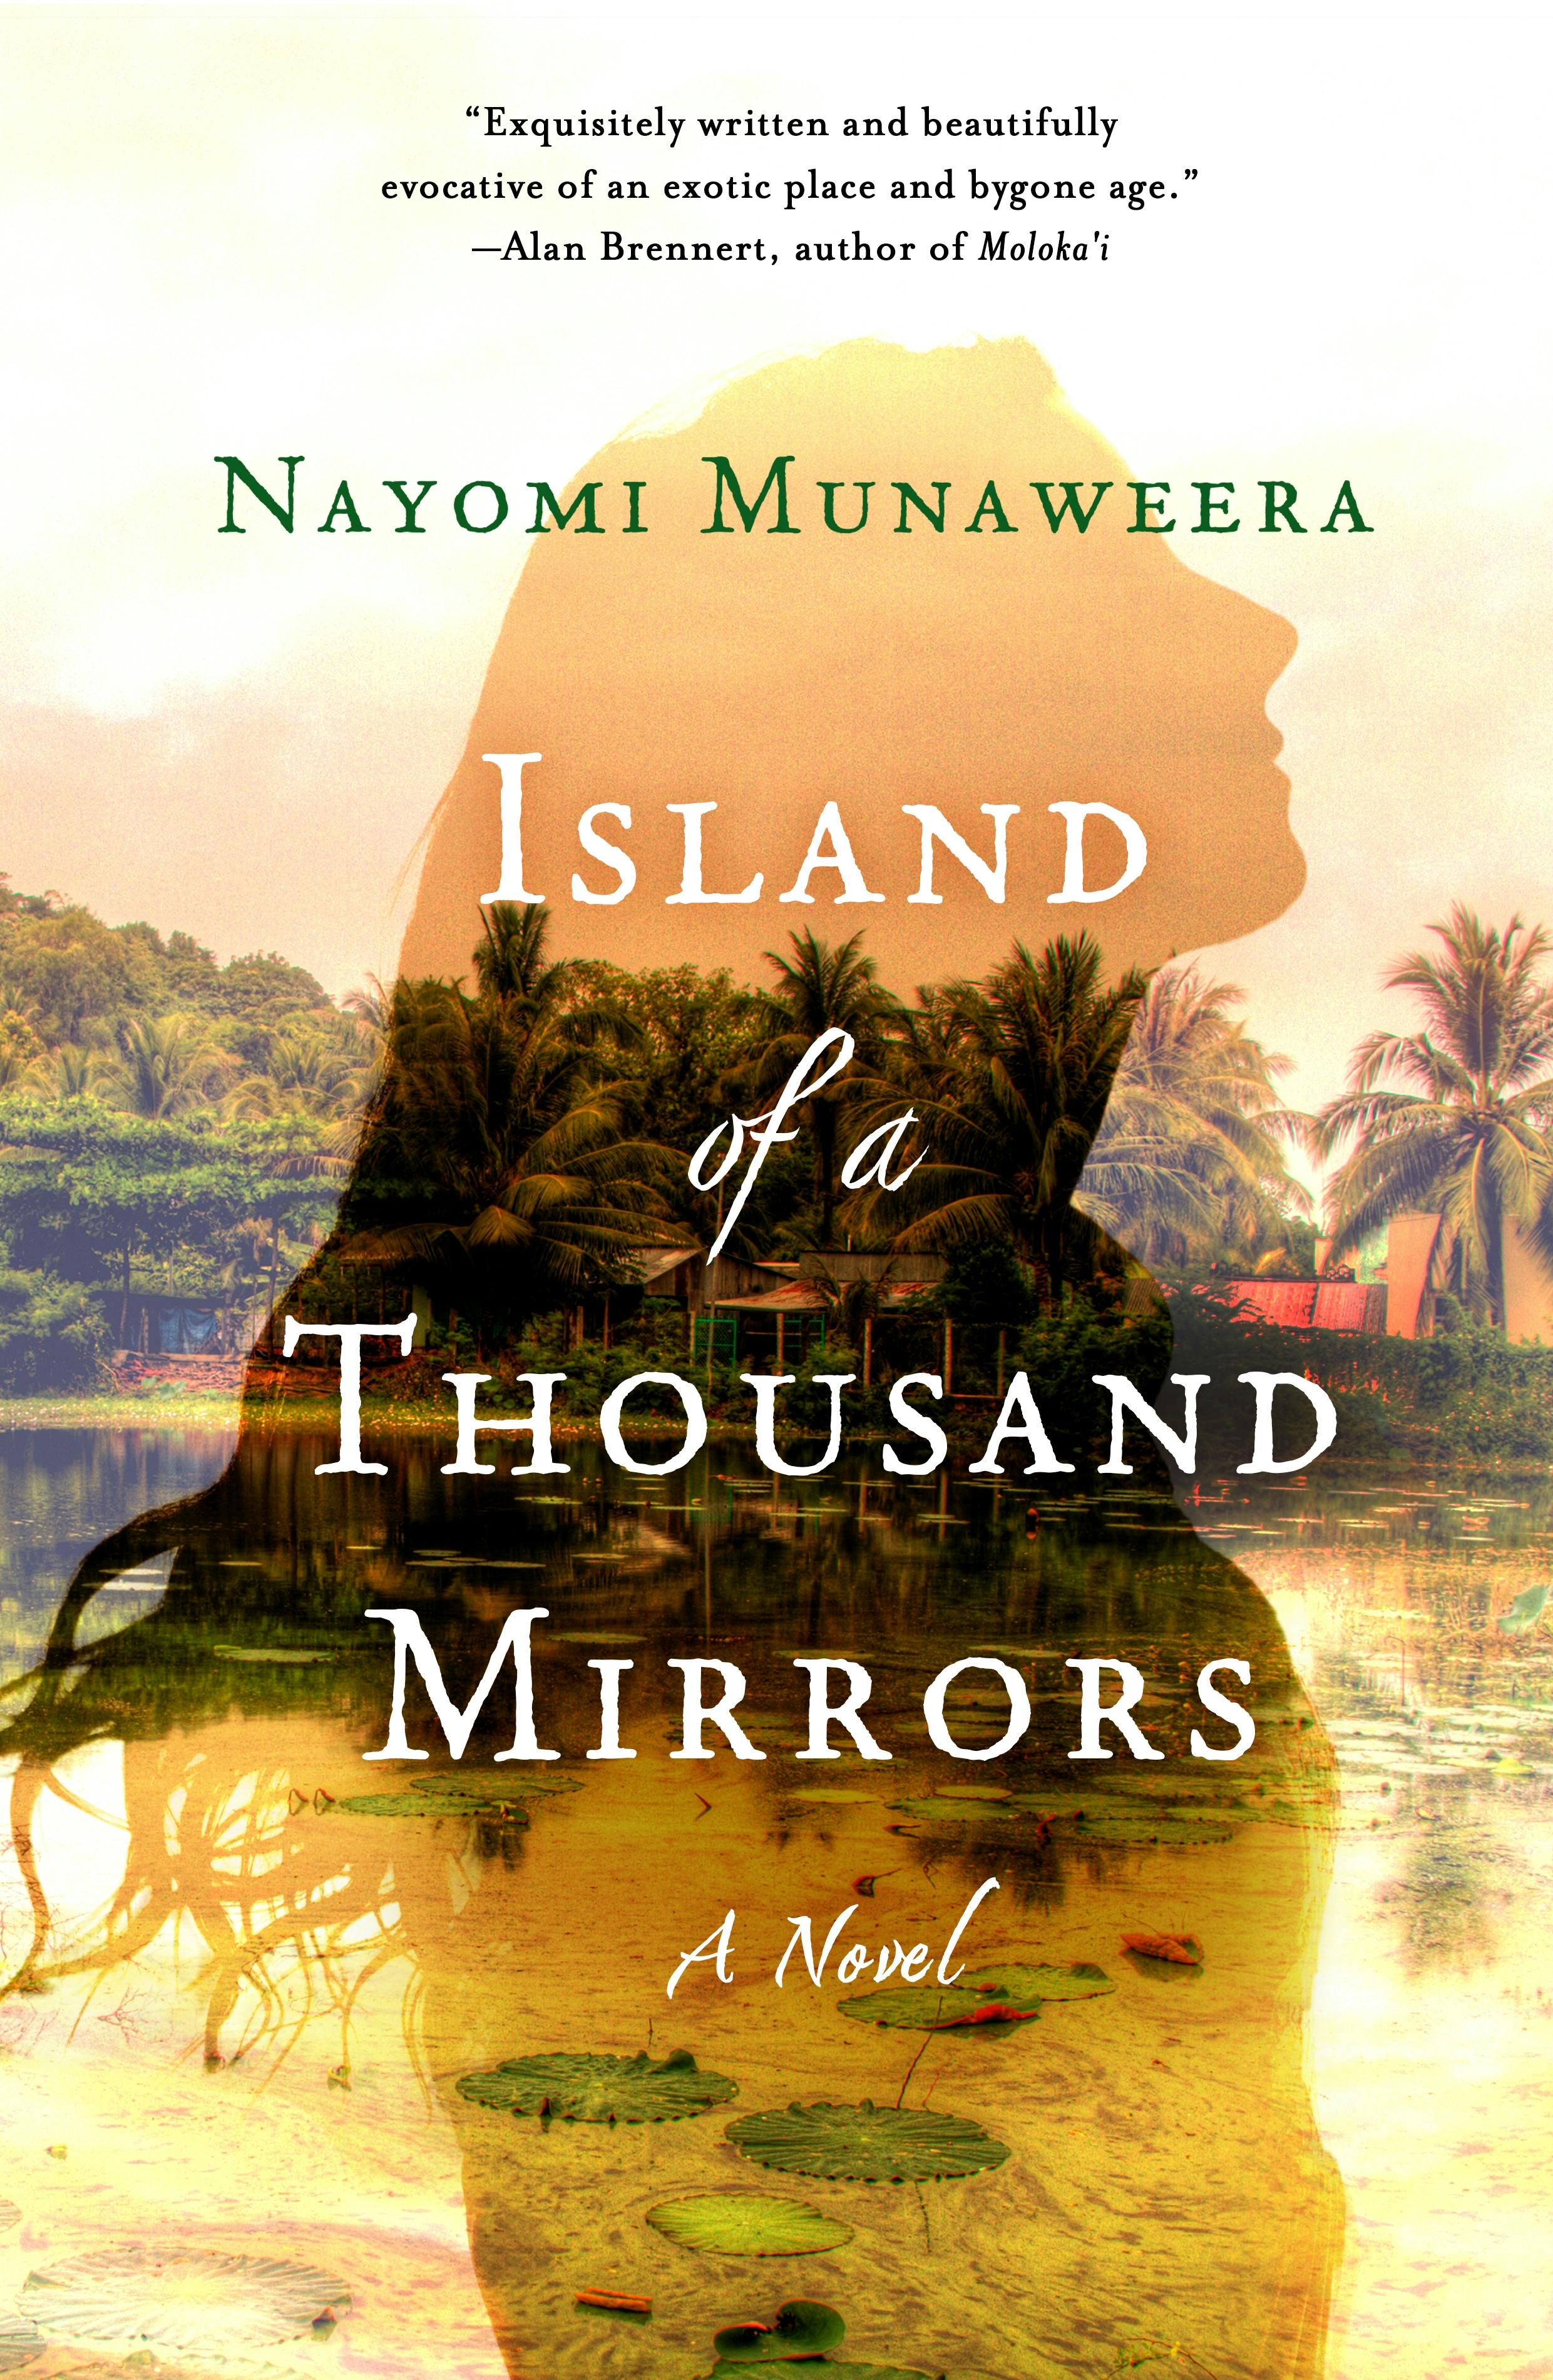 island of 1000 mirrors